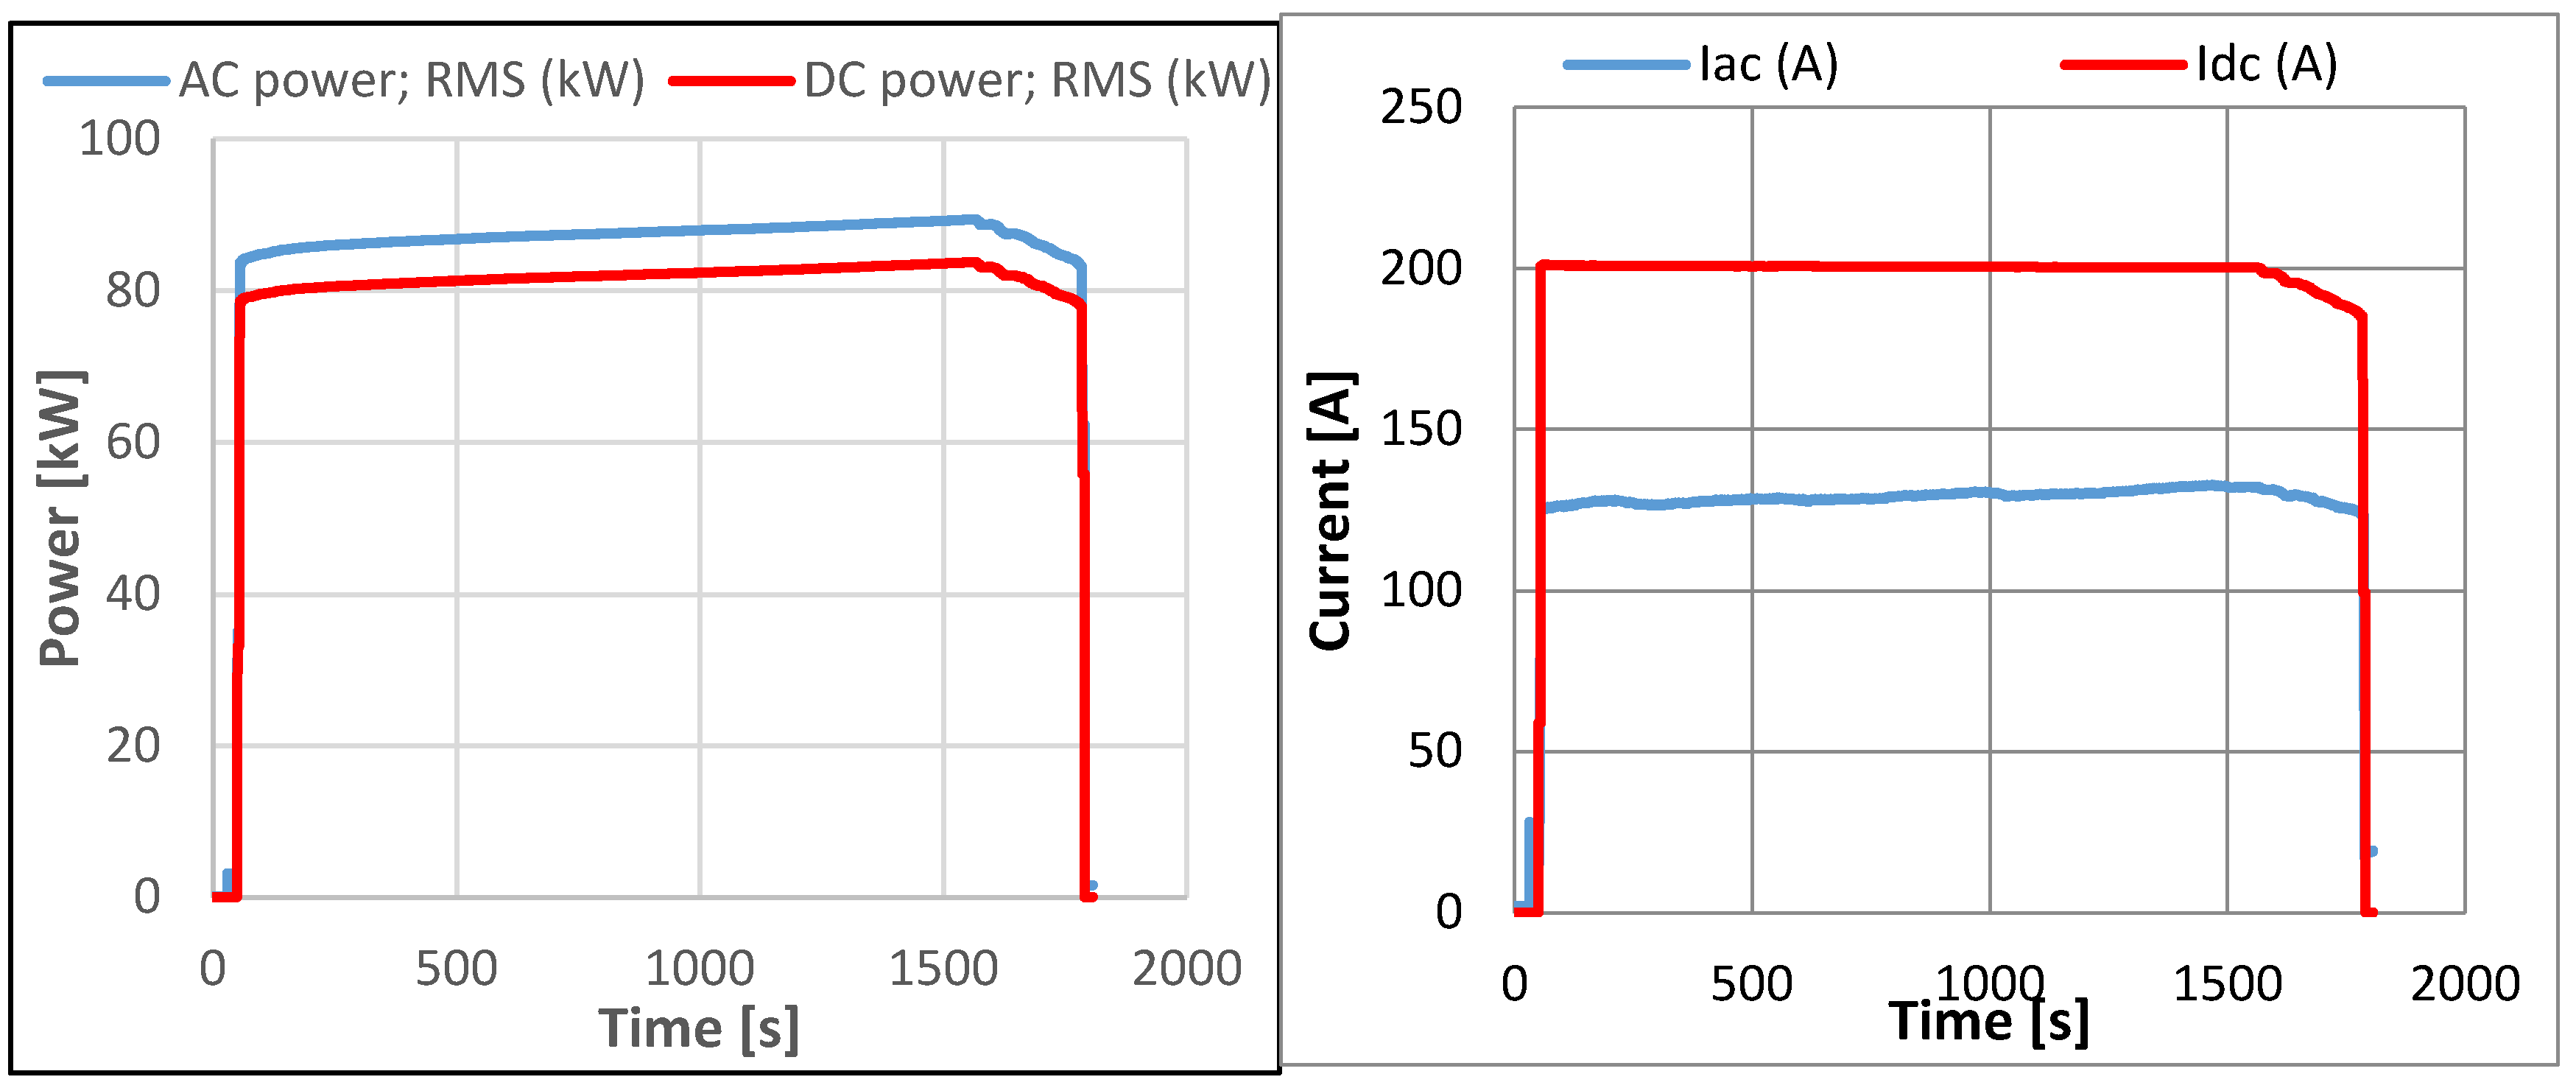 HTTK-238 Digital Humidity & Temperature Meter 0~100% RH/ -30~70°C